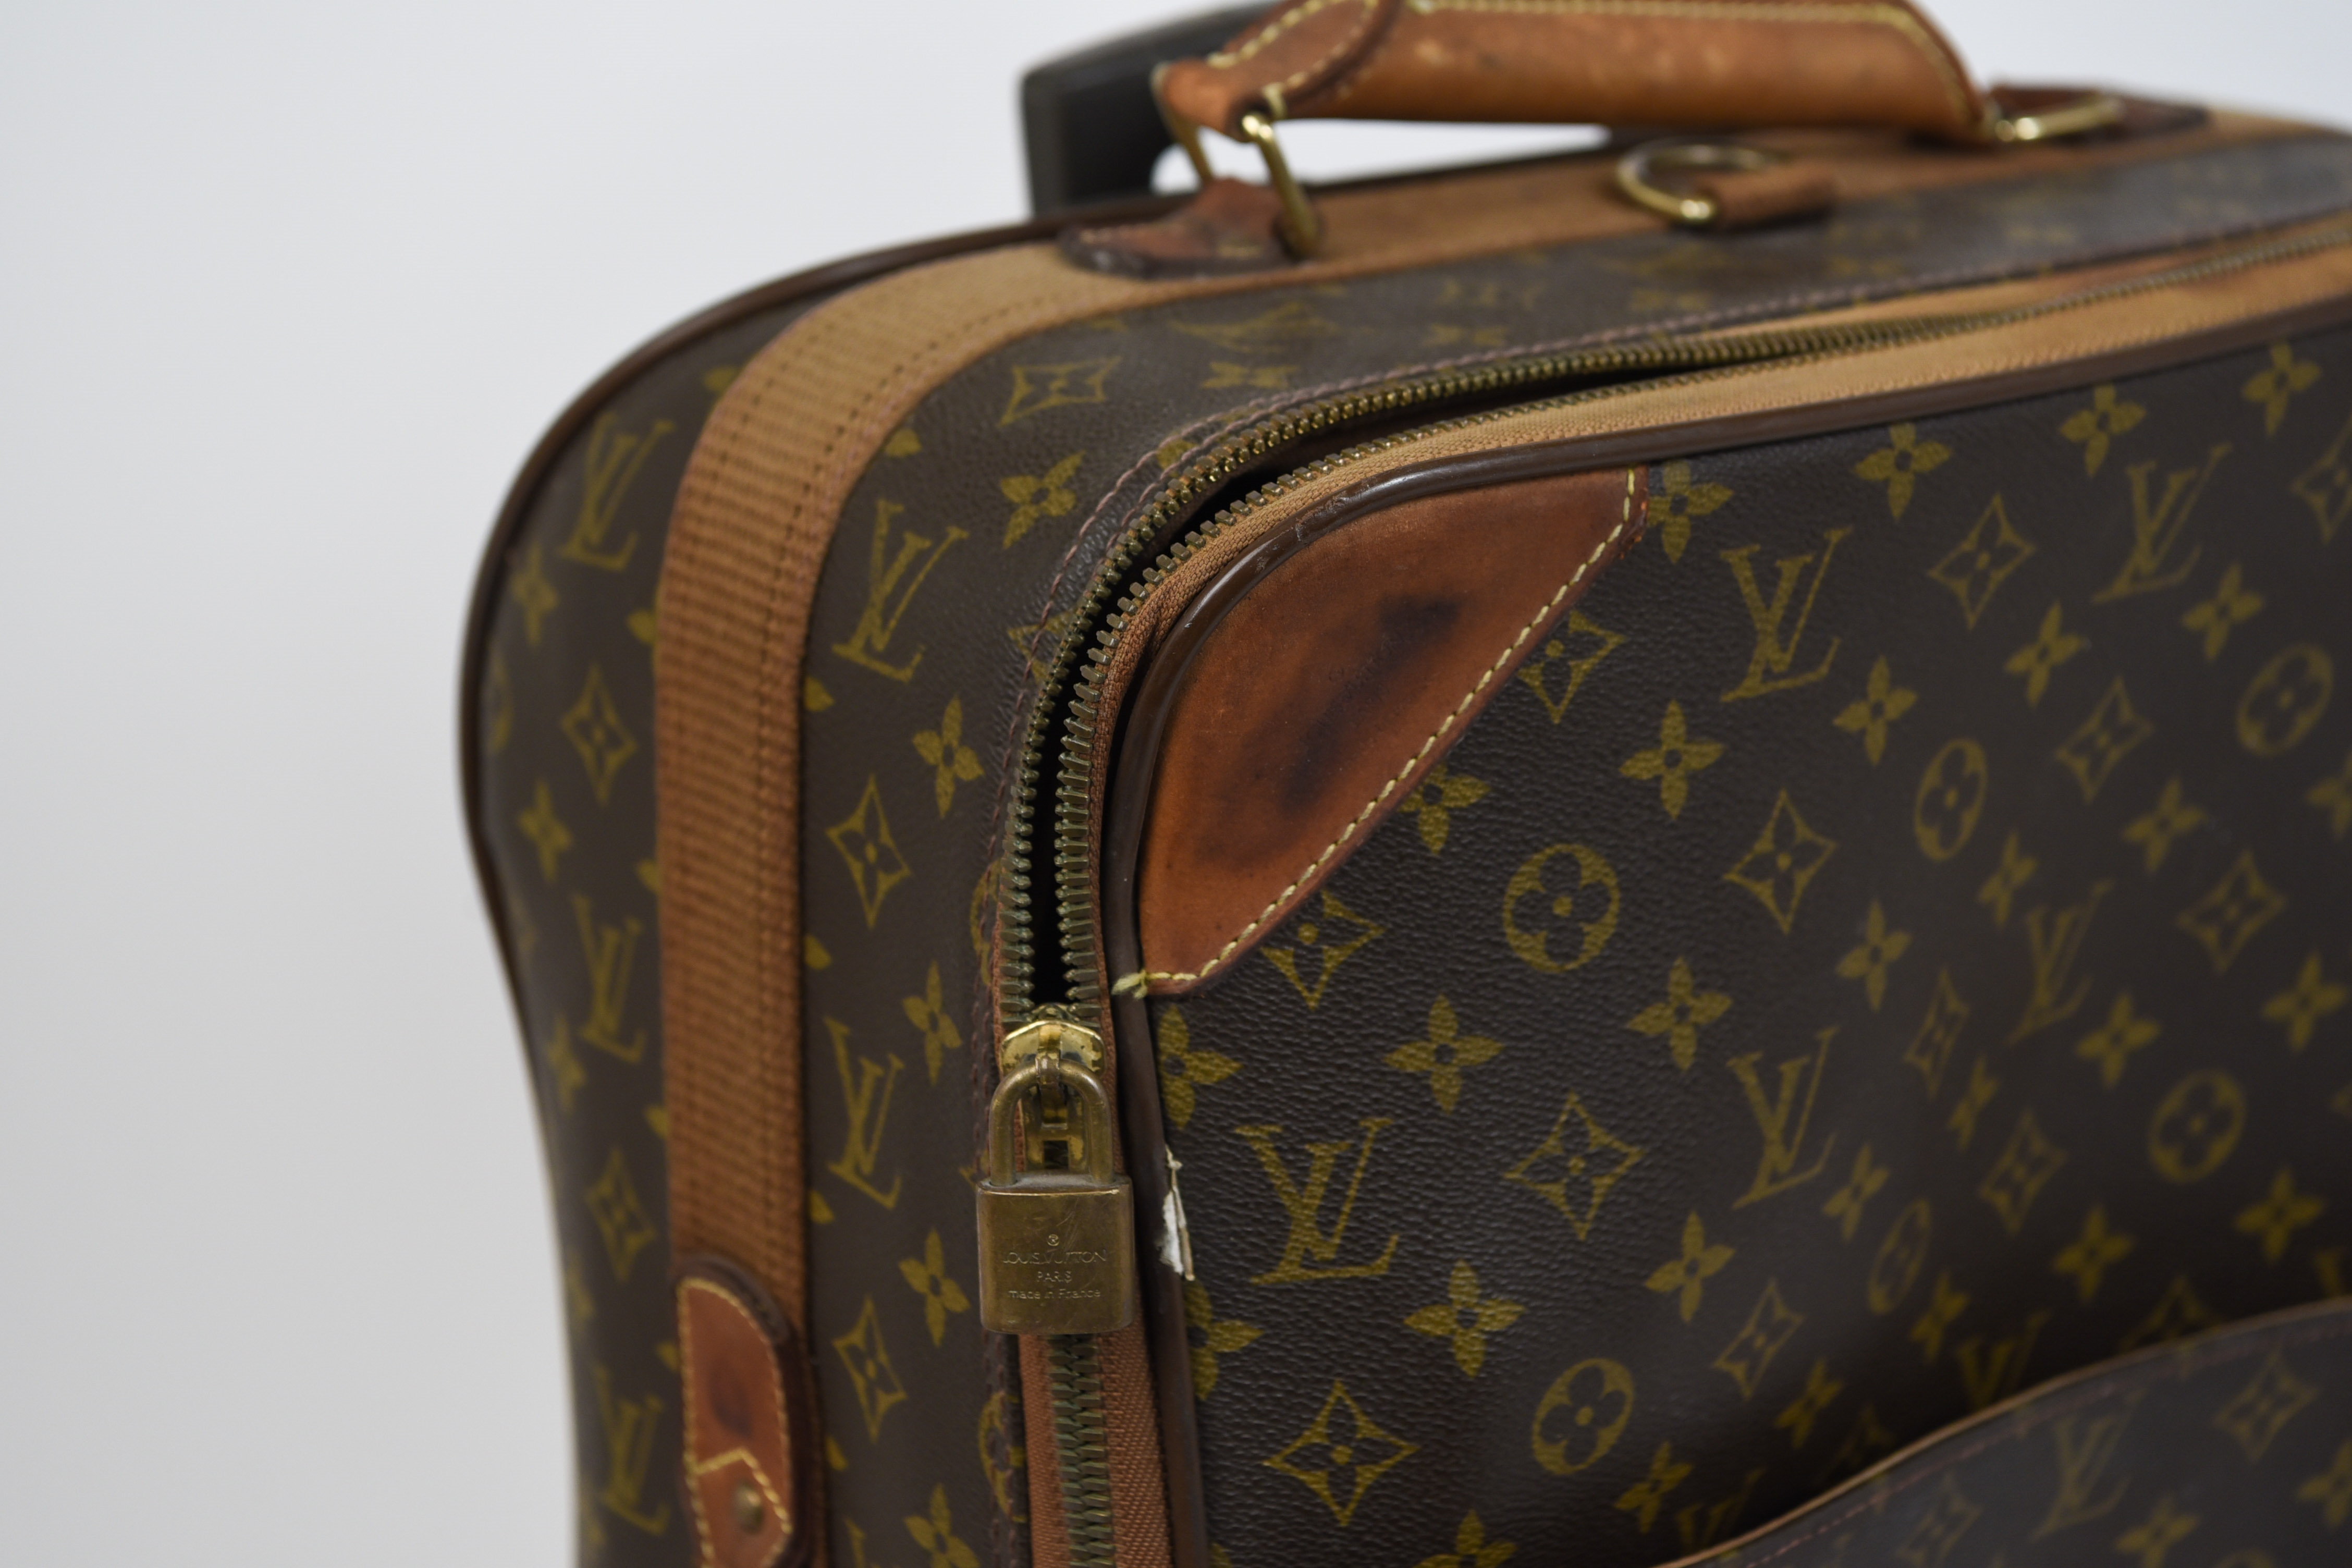 Sold at Auction: vintage Louis Vuitton hard side suitcase